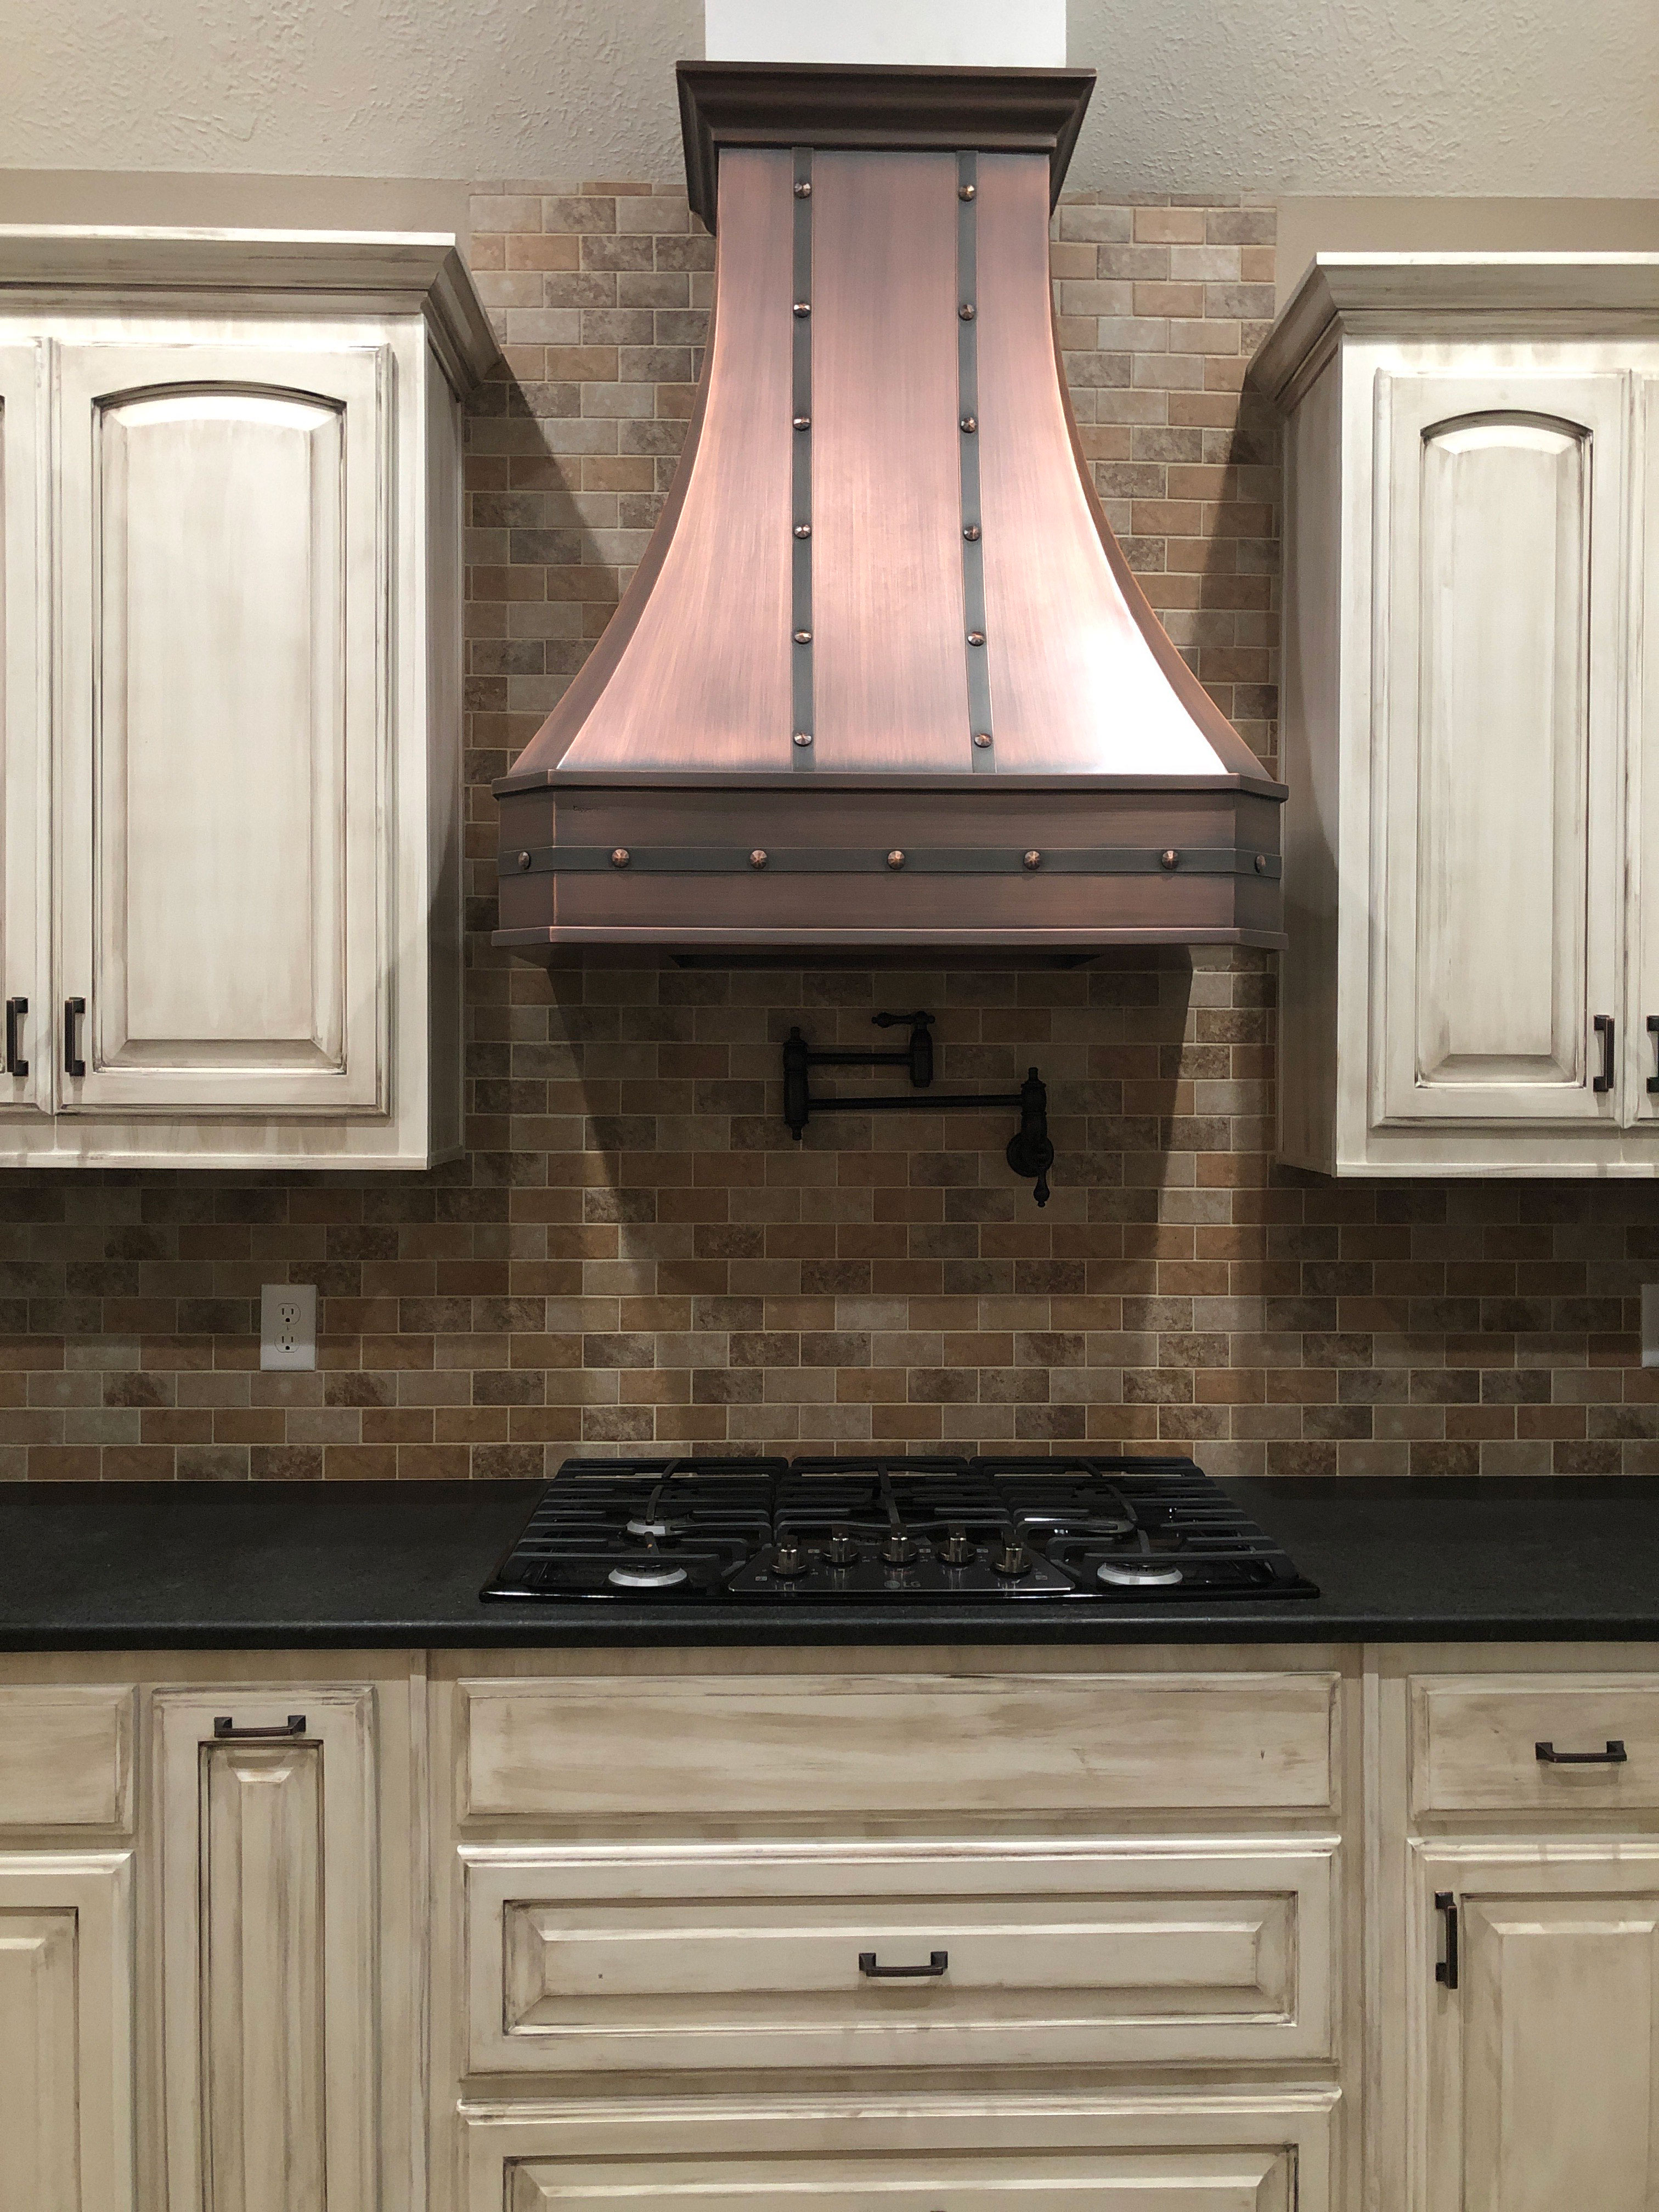 Stunning kitchen design with, range hood, white kitchen cabinets,white kitchen countertops with brick backsplash